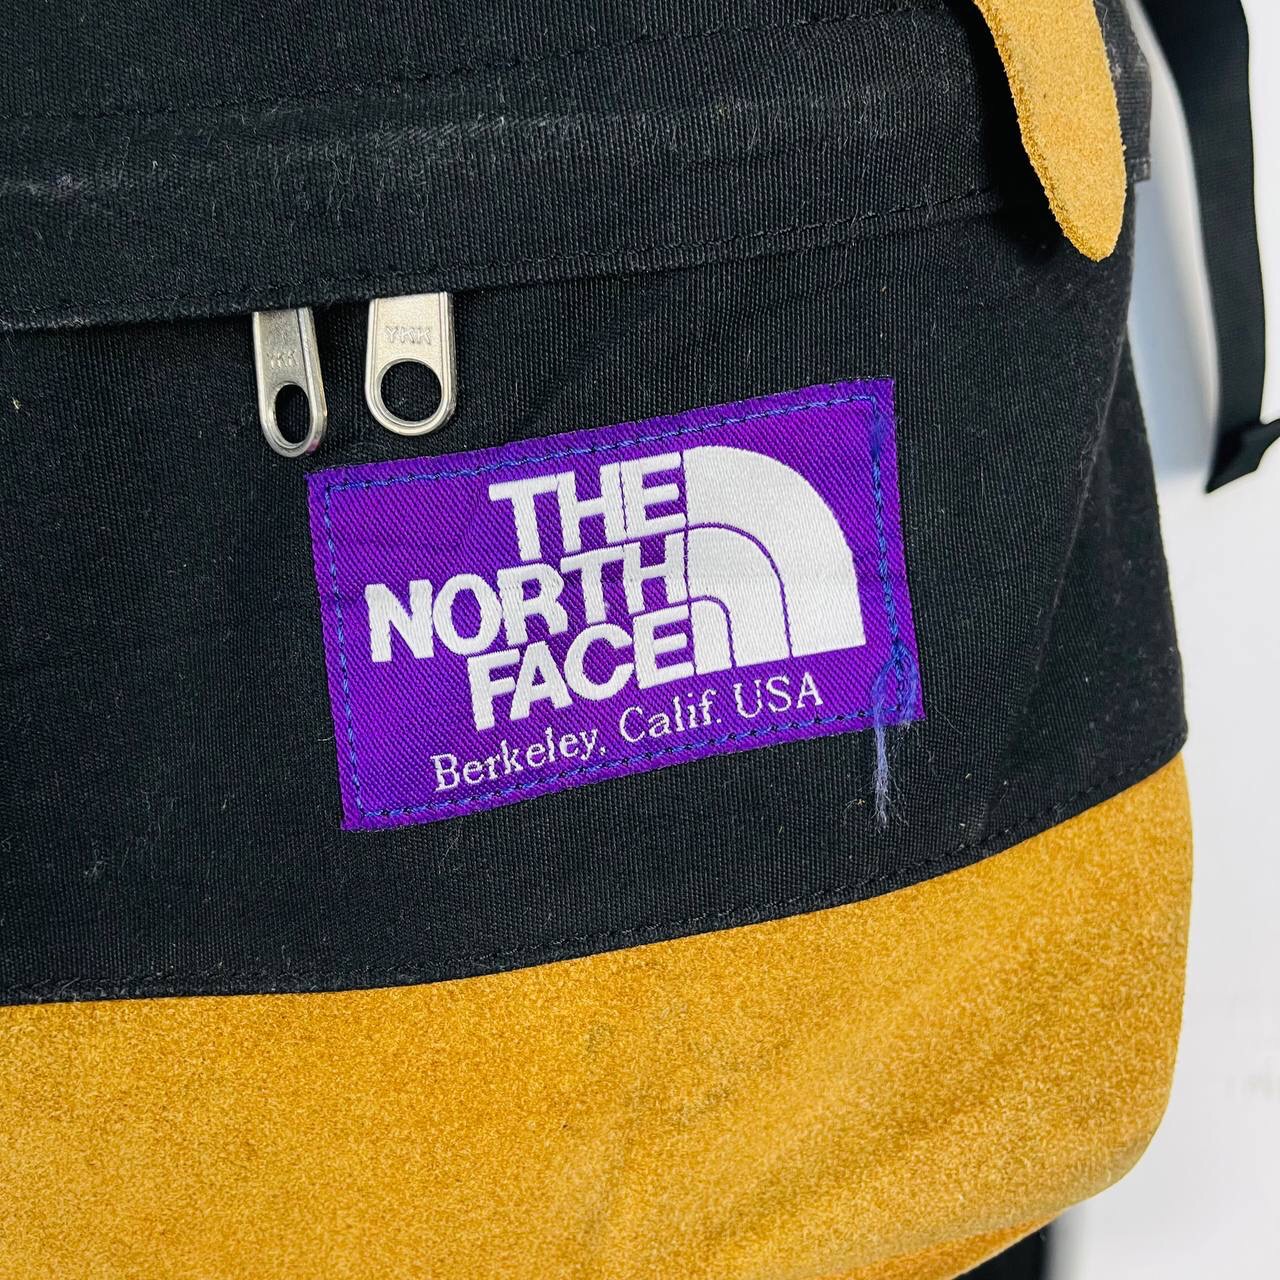 THE NORTH FACE NANAMICA BERKELEY PURPLE LABEL BACKPACK BAG - 4